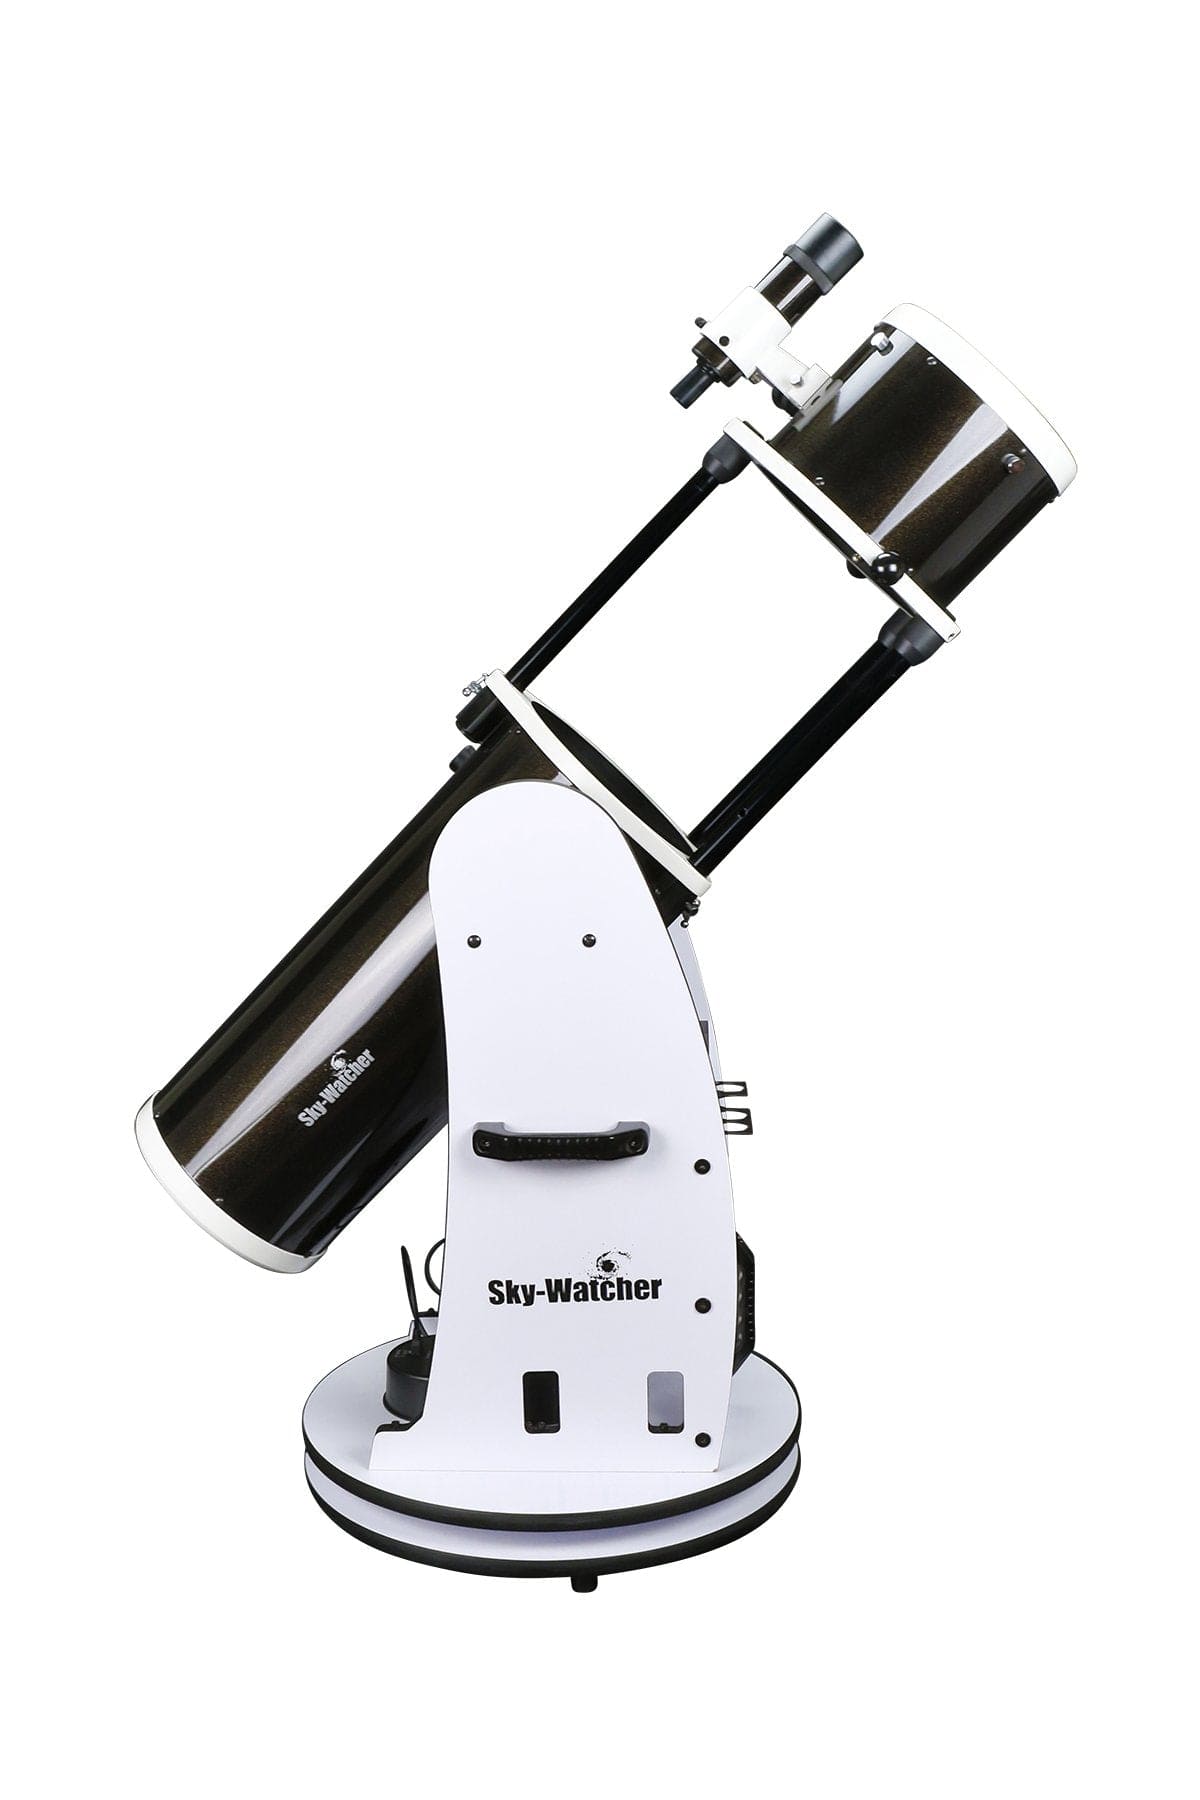 Sky-Watcher Telescope Sky-Watcher Flextube 200P 8" SynScan GoTo Collapsible Dobsonian